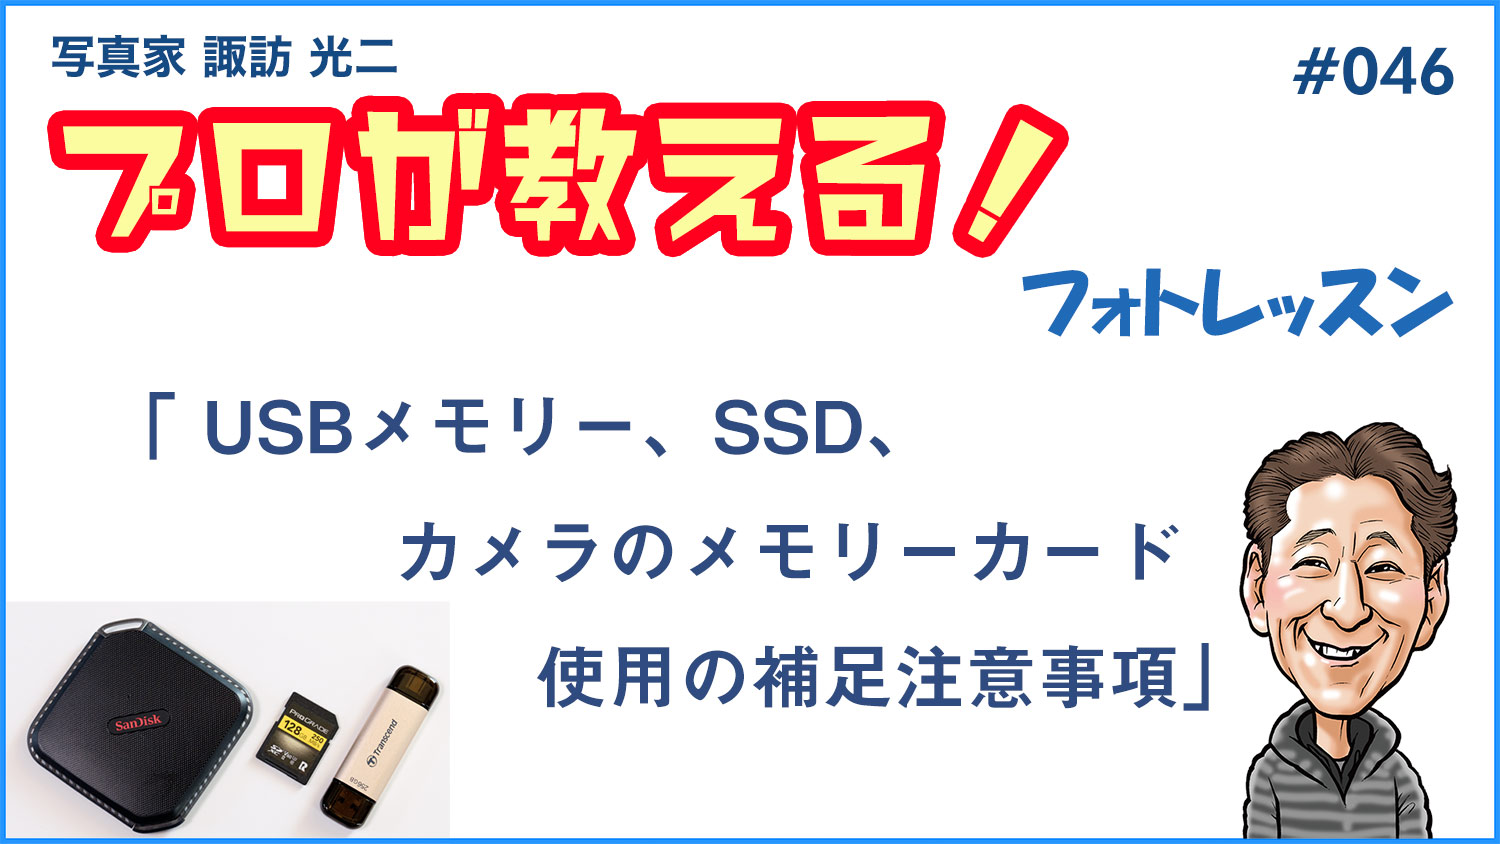 #046「USBメモリー、SSD、カメラのメモリーカード使用の補足注意事項」 | SUWA CHANNEL WEB